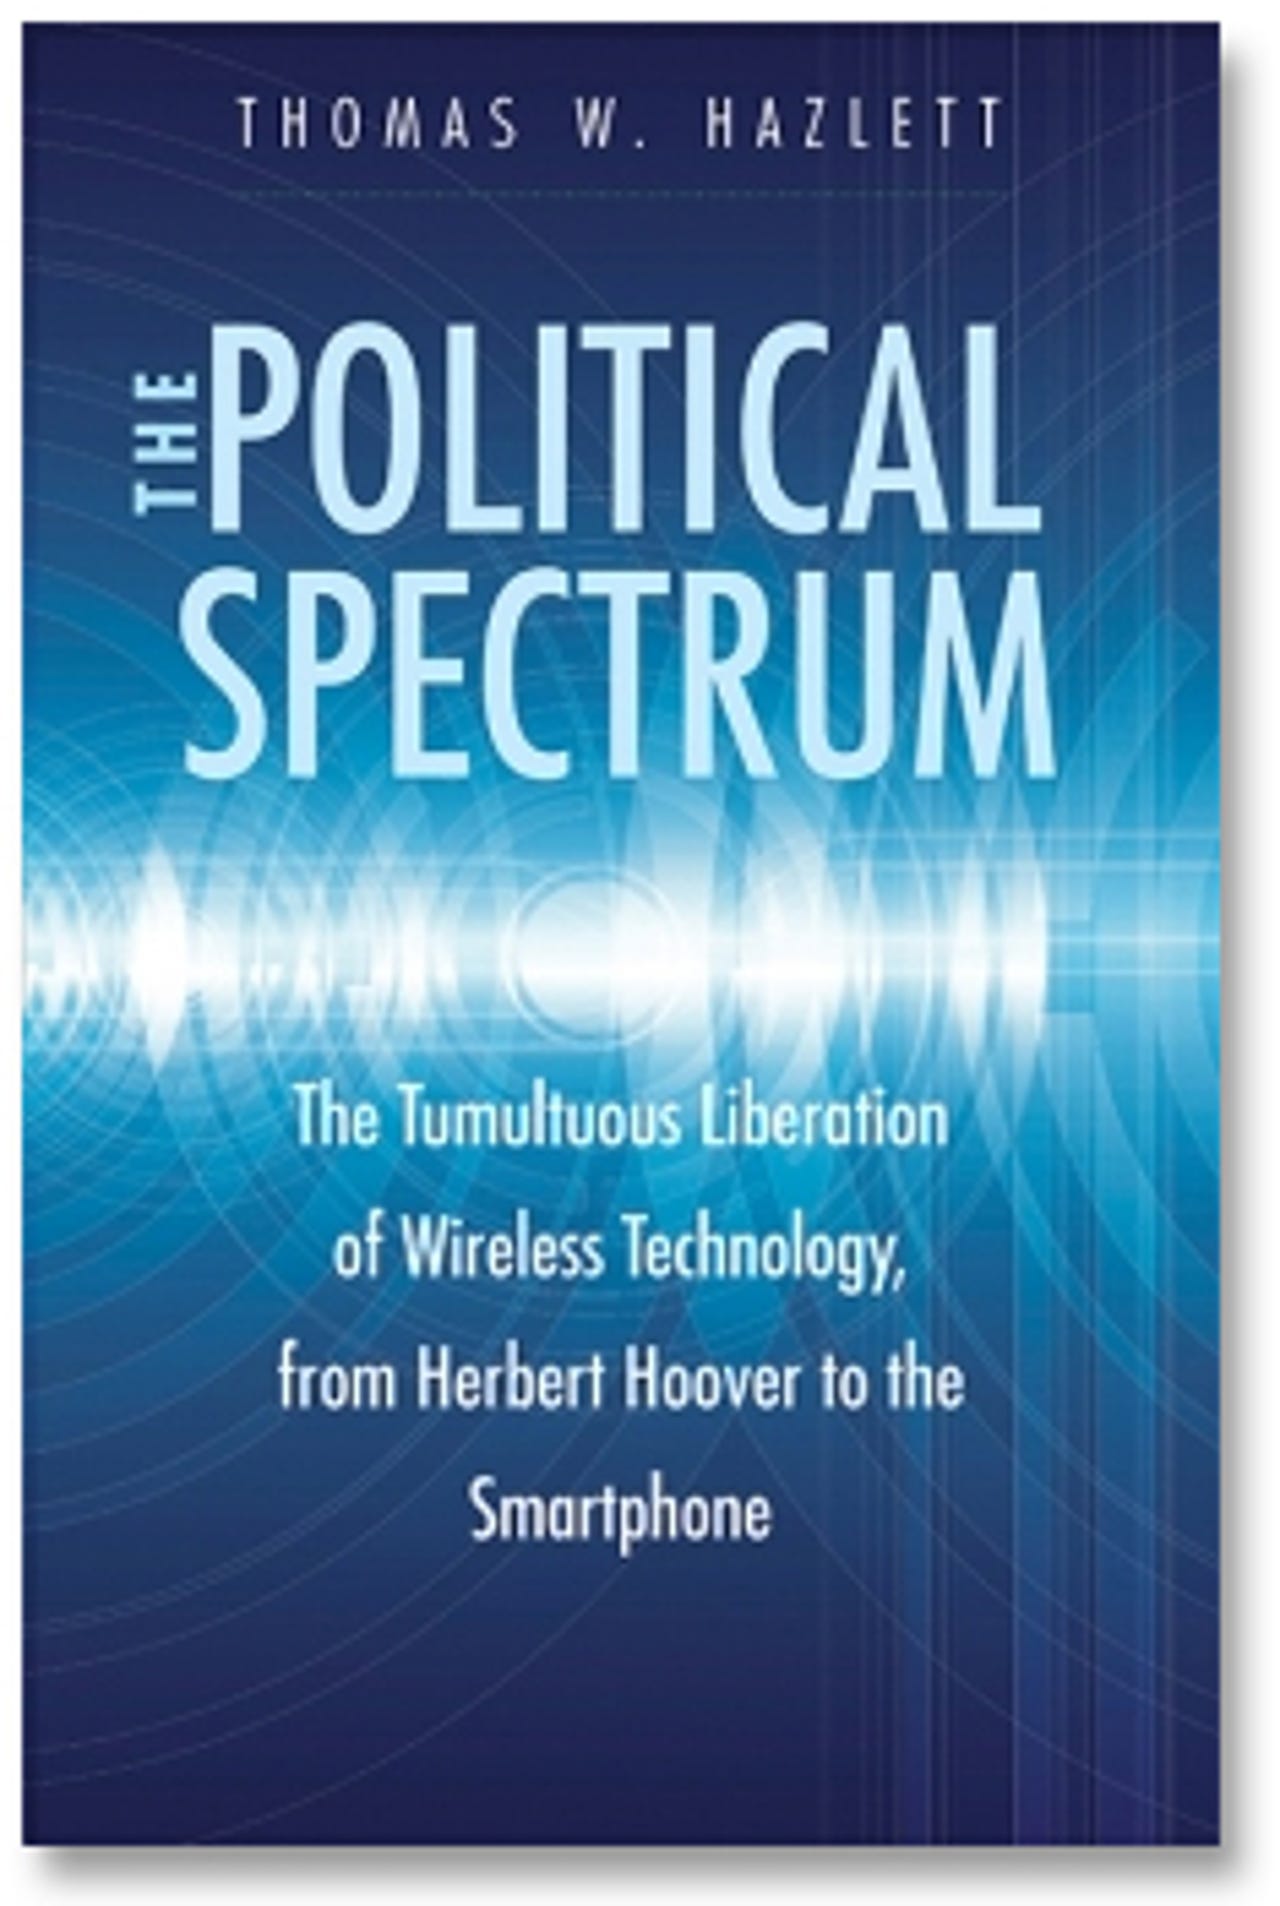 political-spectrum-book-main.jpg